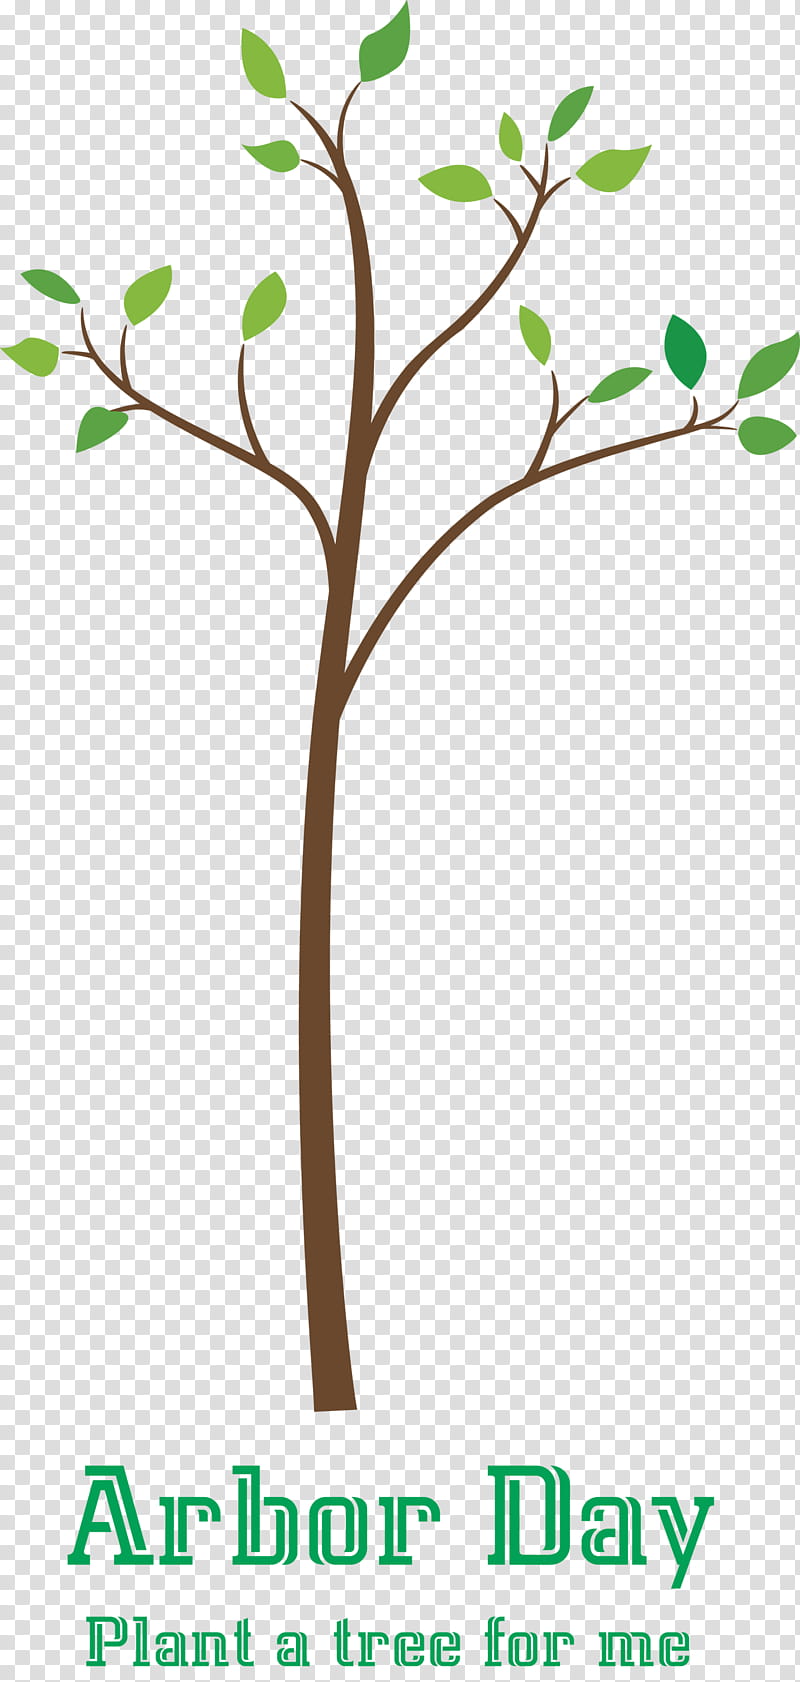 Arbor Day Tree Green, Branch, Plant, Plant Stem, Leaf, Twig, Flower transparent background PNG clipart